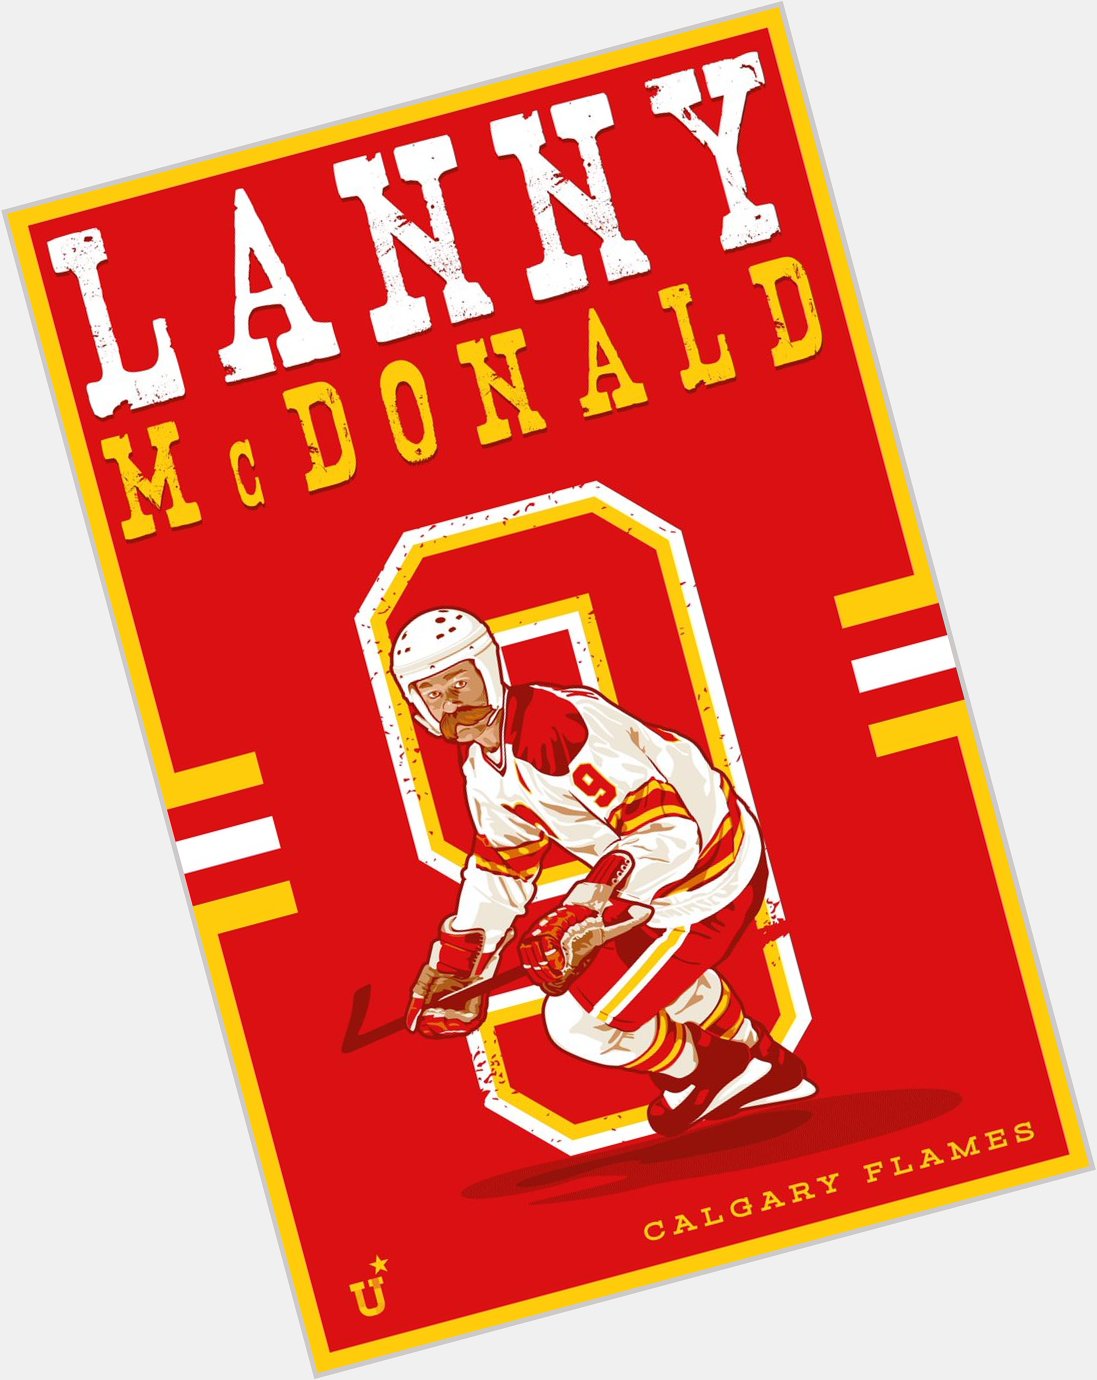 Happy Birthday to the great Lanny McDonald!  